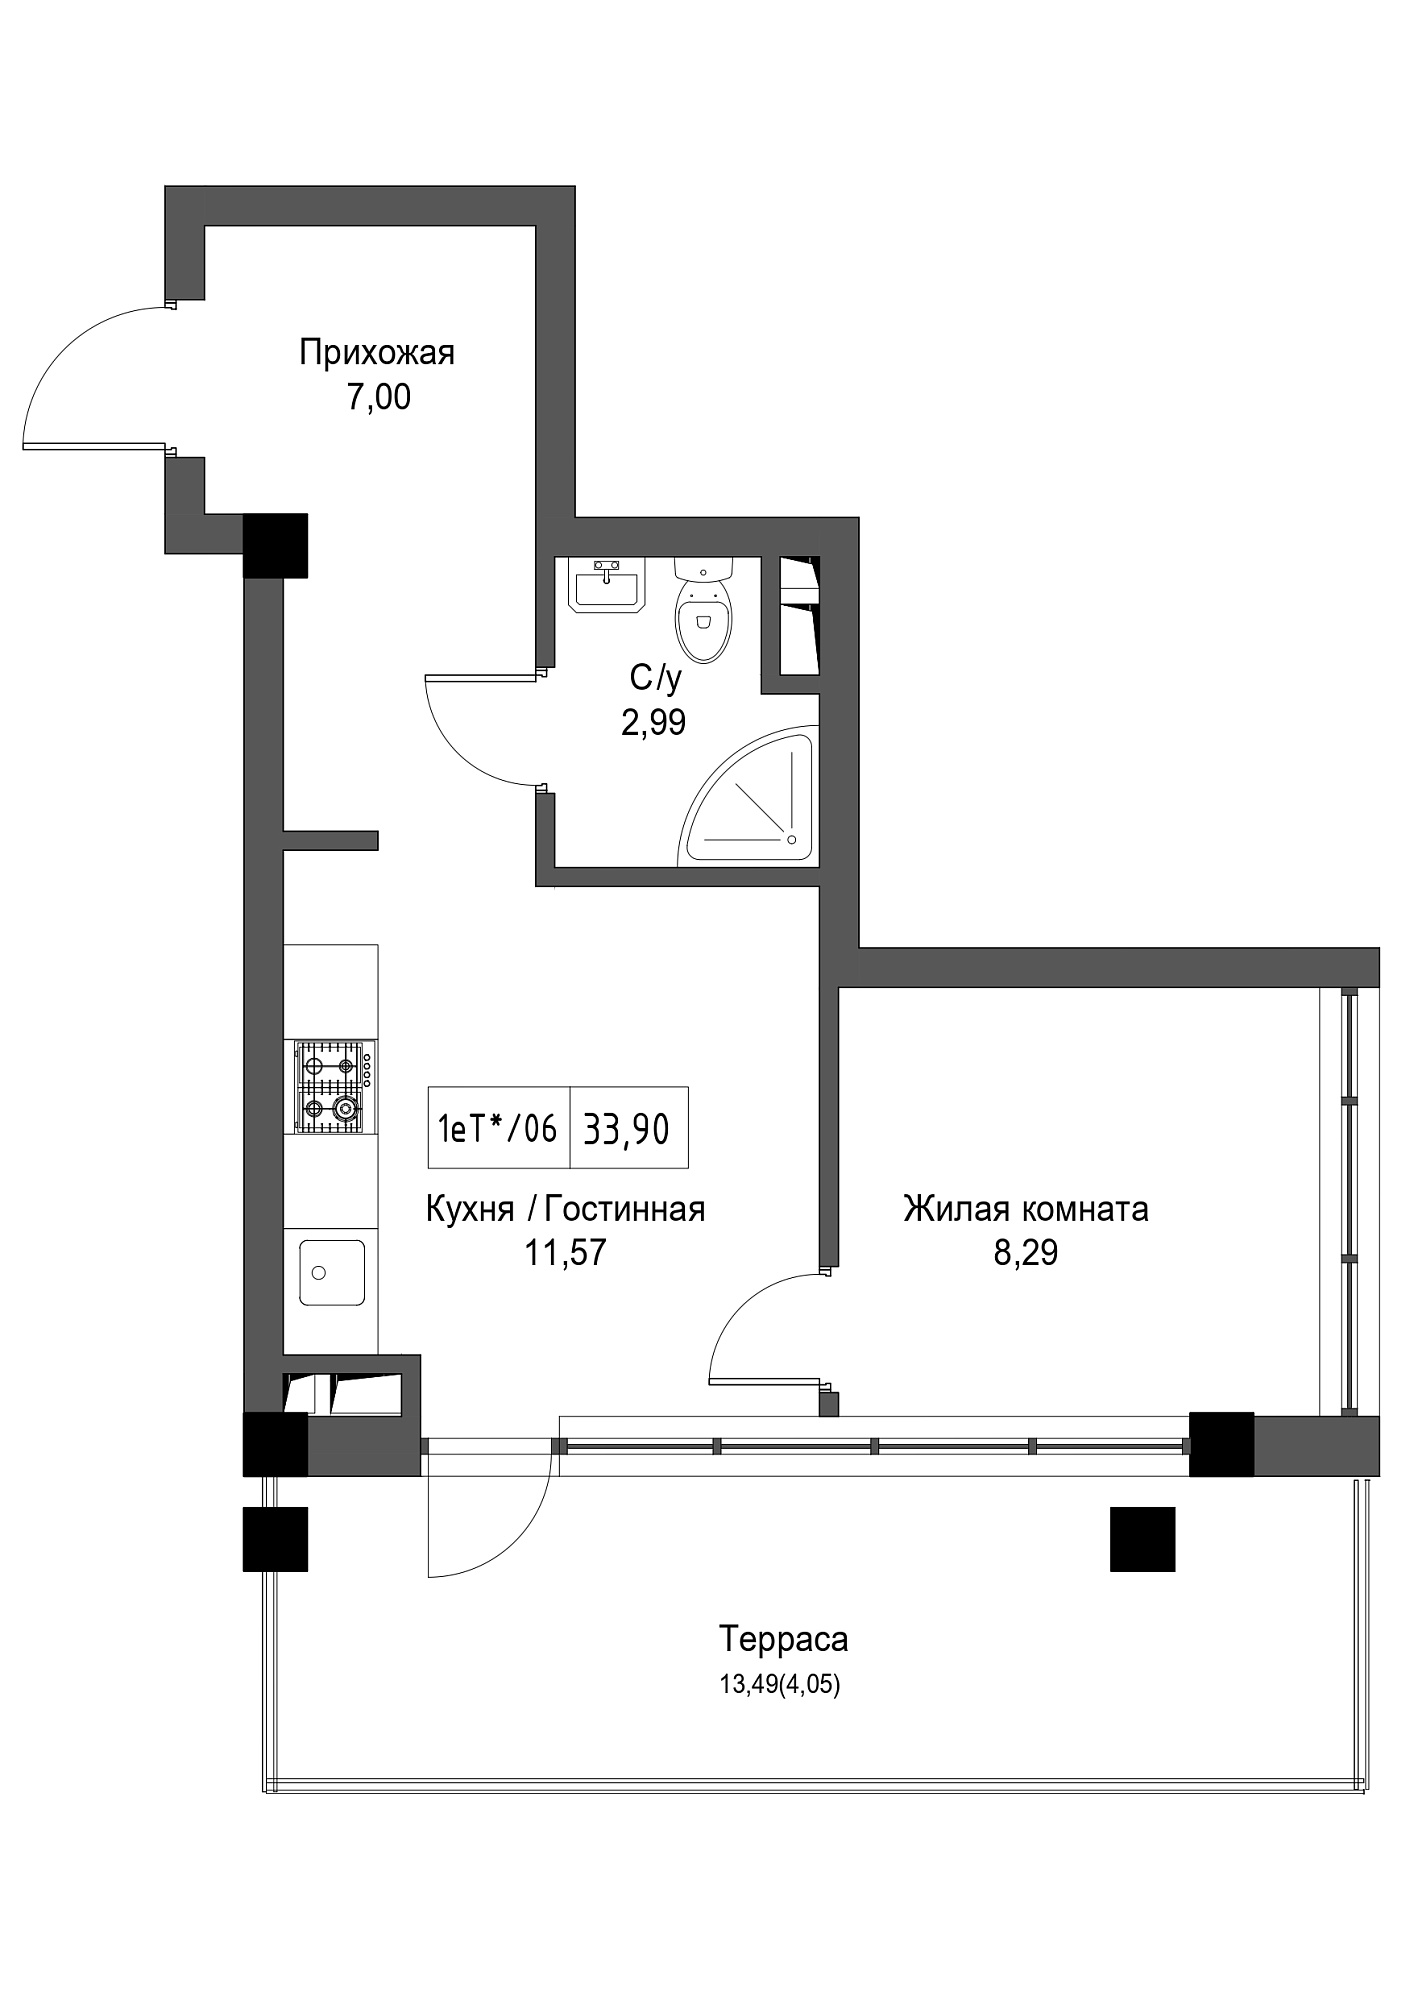 Планування 1-к квартира площею 33.9м2, UM-002-02/0093.